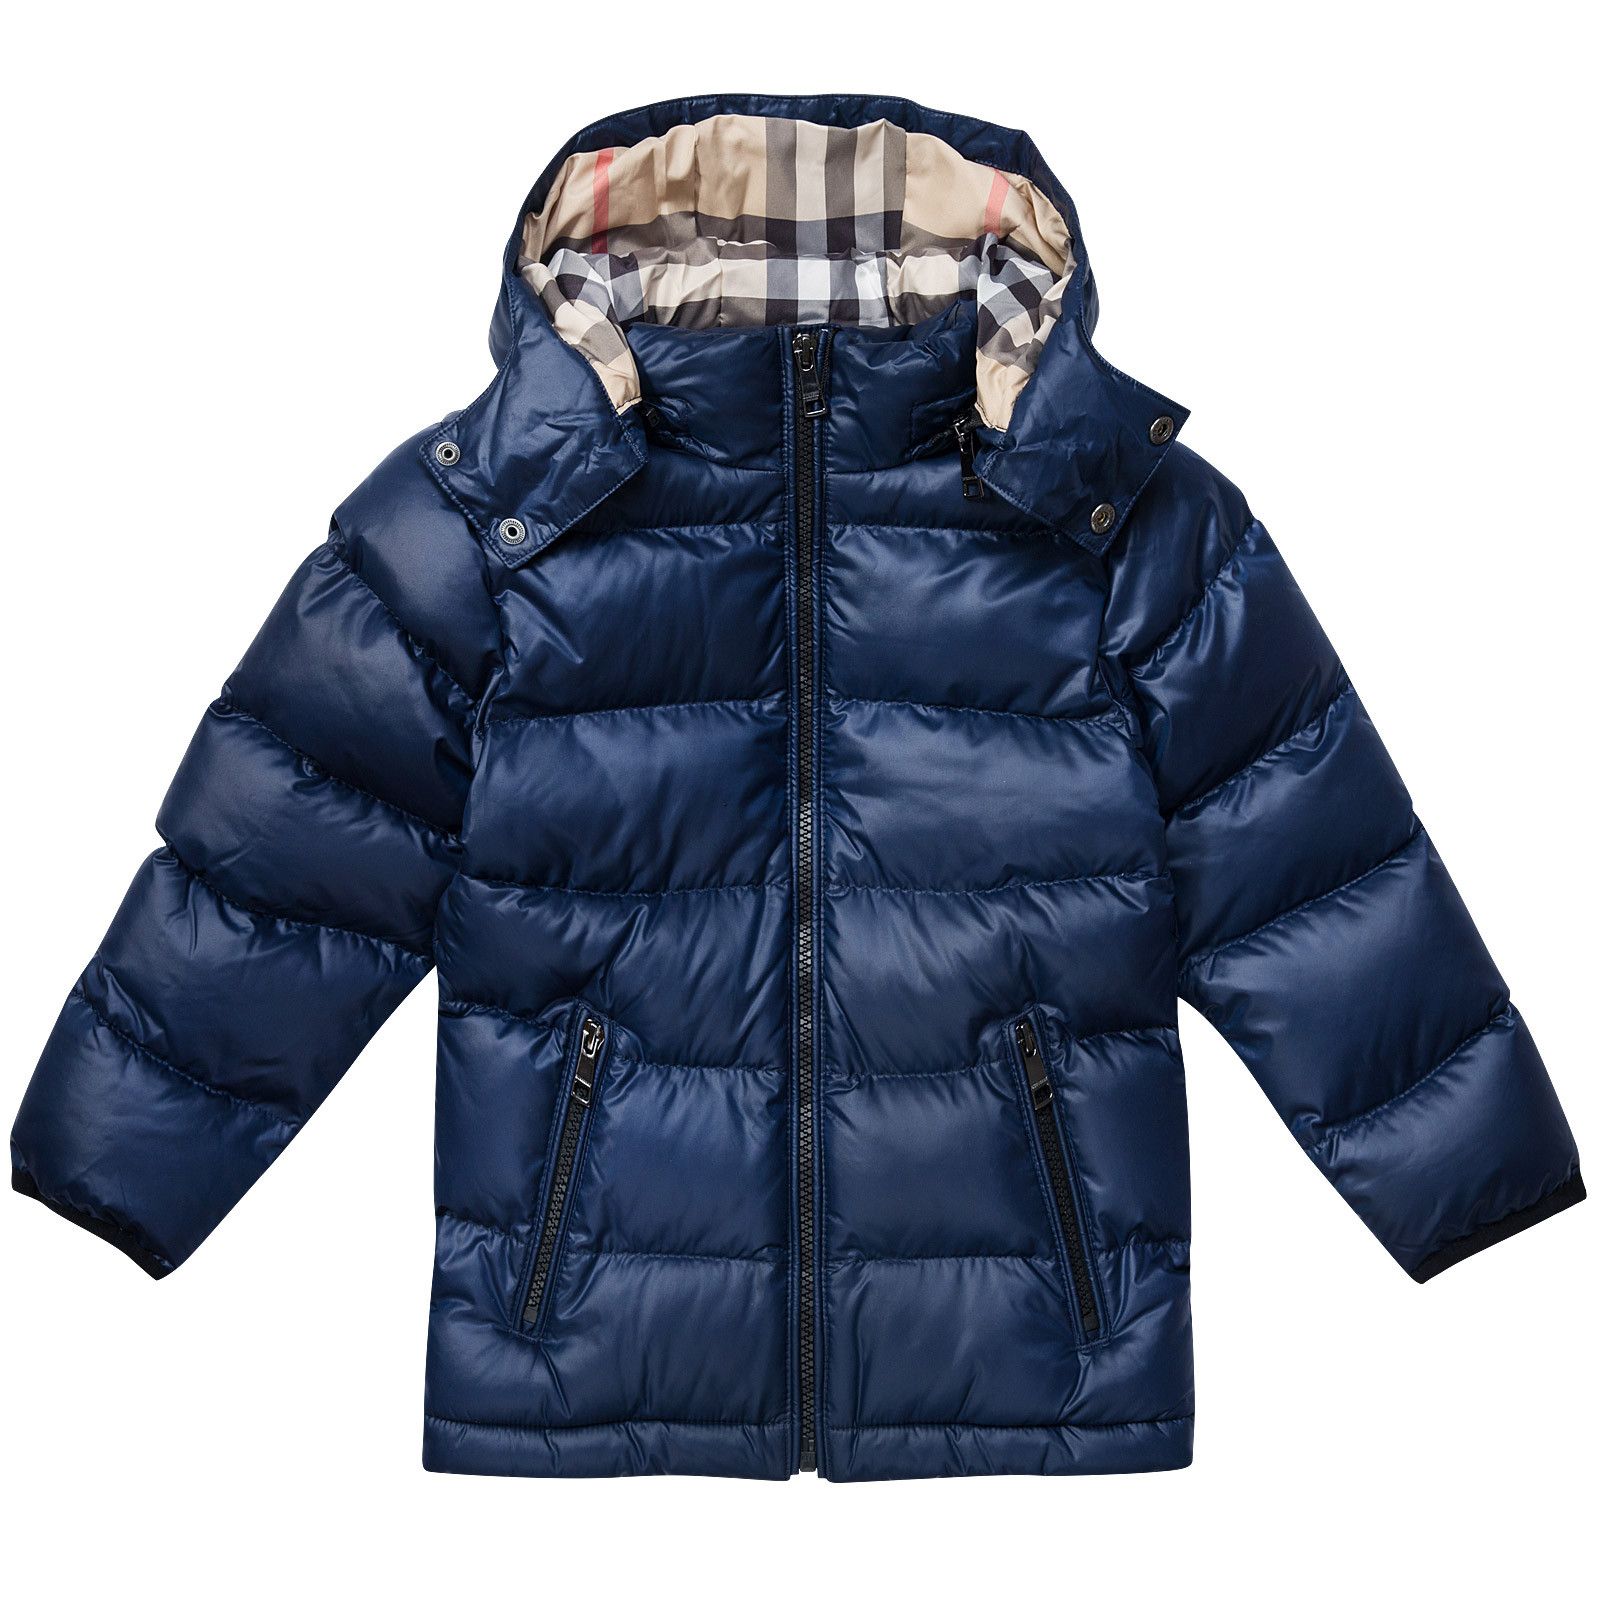 Boys Navy Blue Hooded Puffer Jacket - CÉMAROSE | Children's Fashion Store - 1